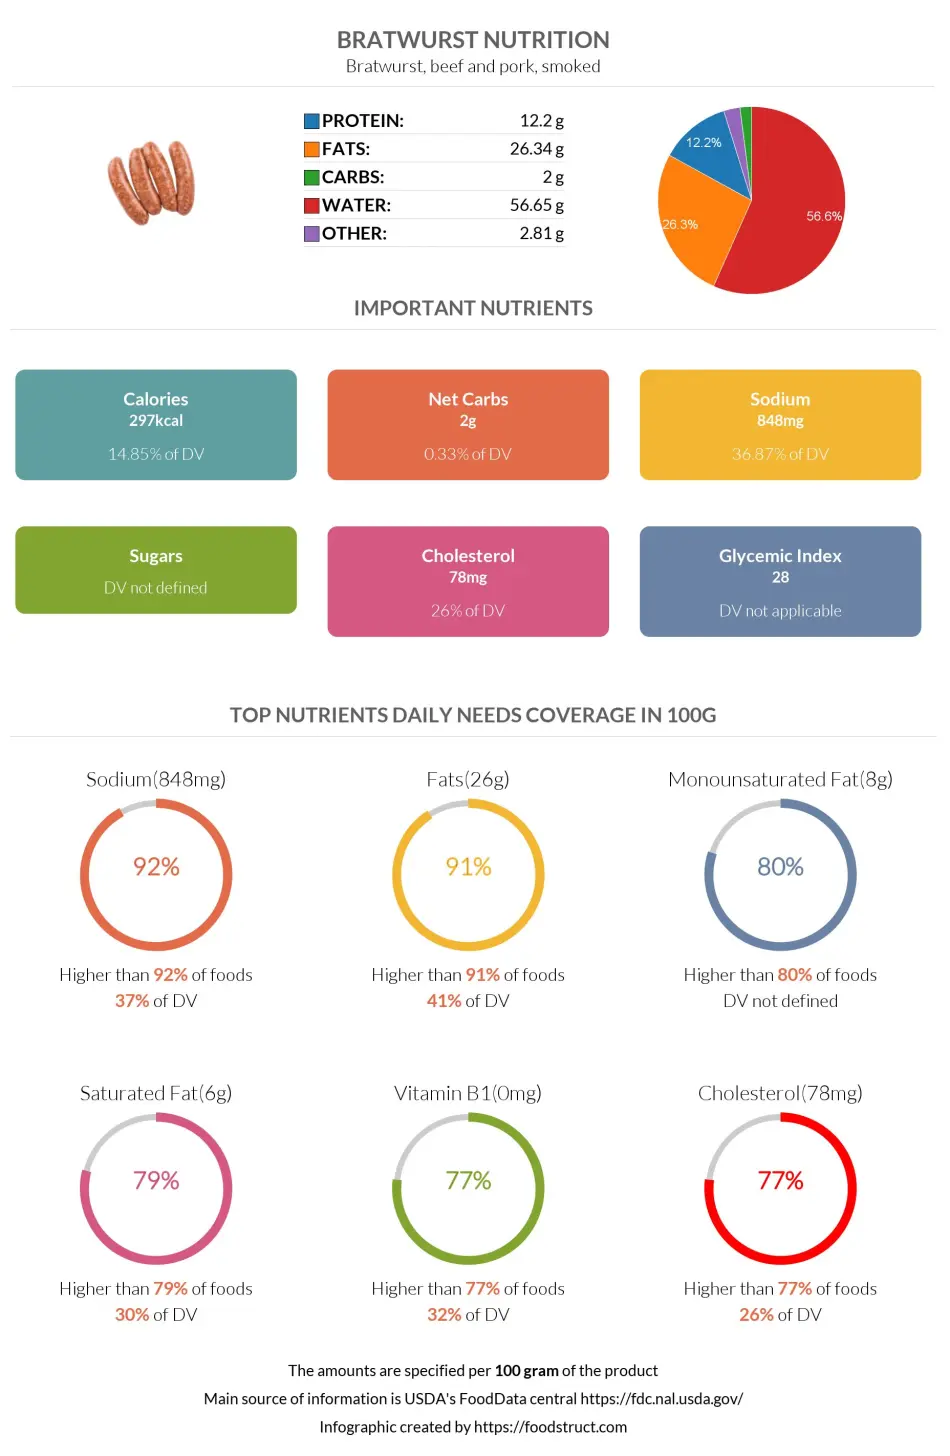 Bratwurst nutrition infographic